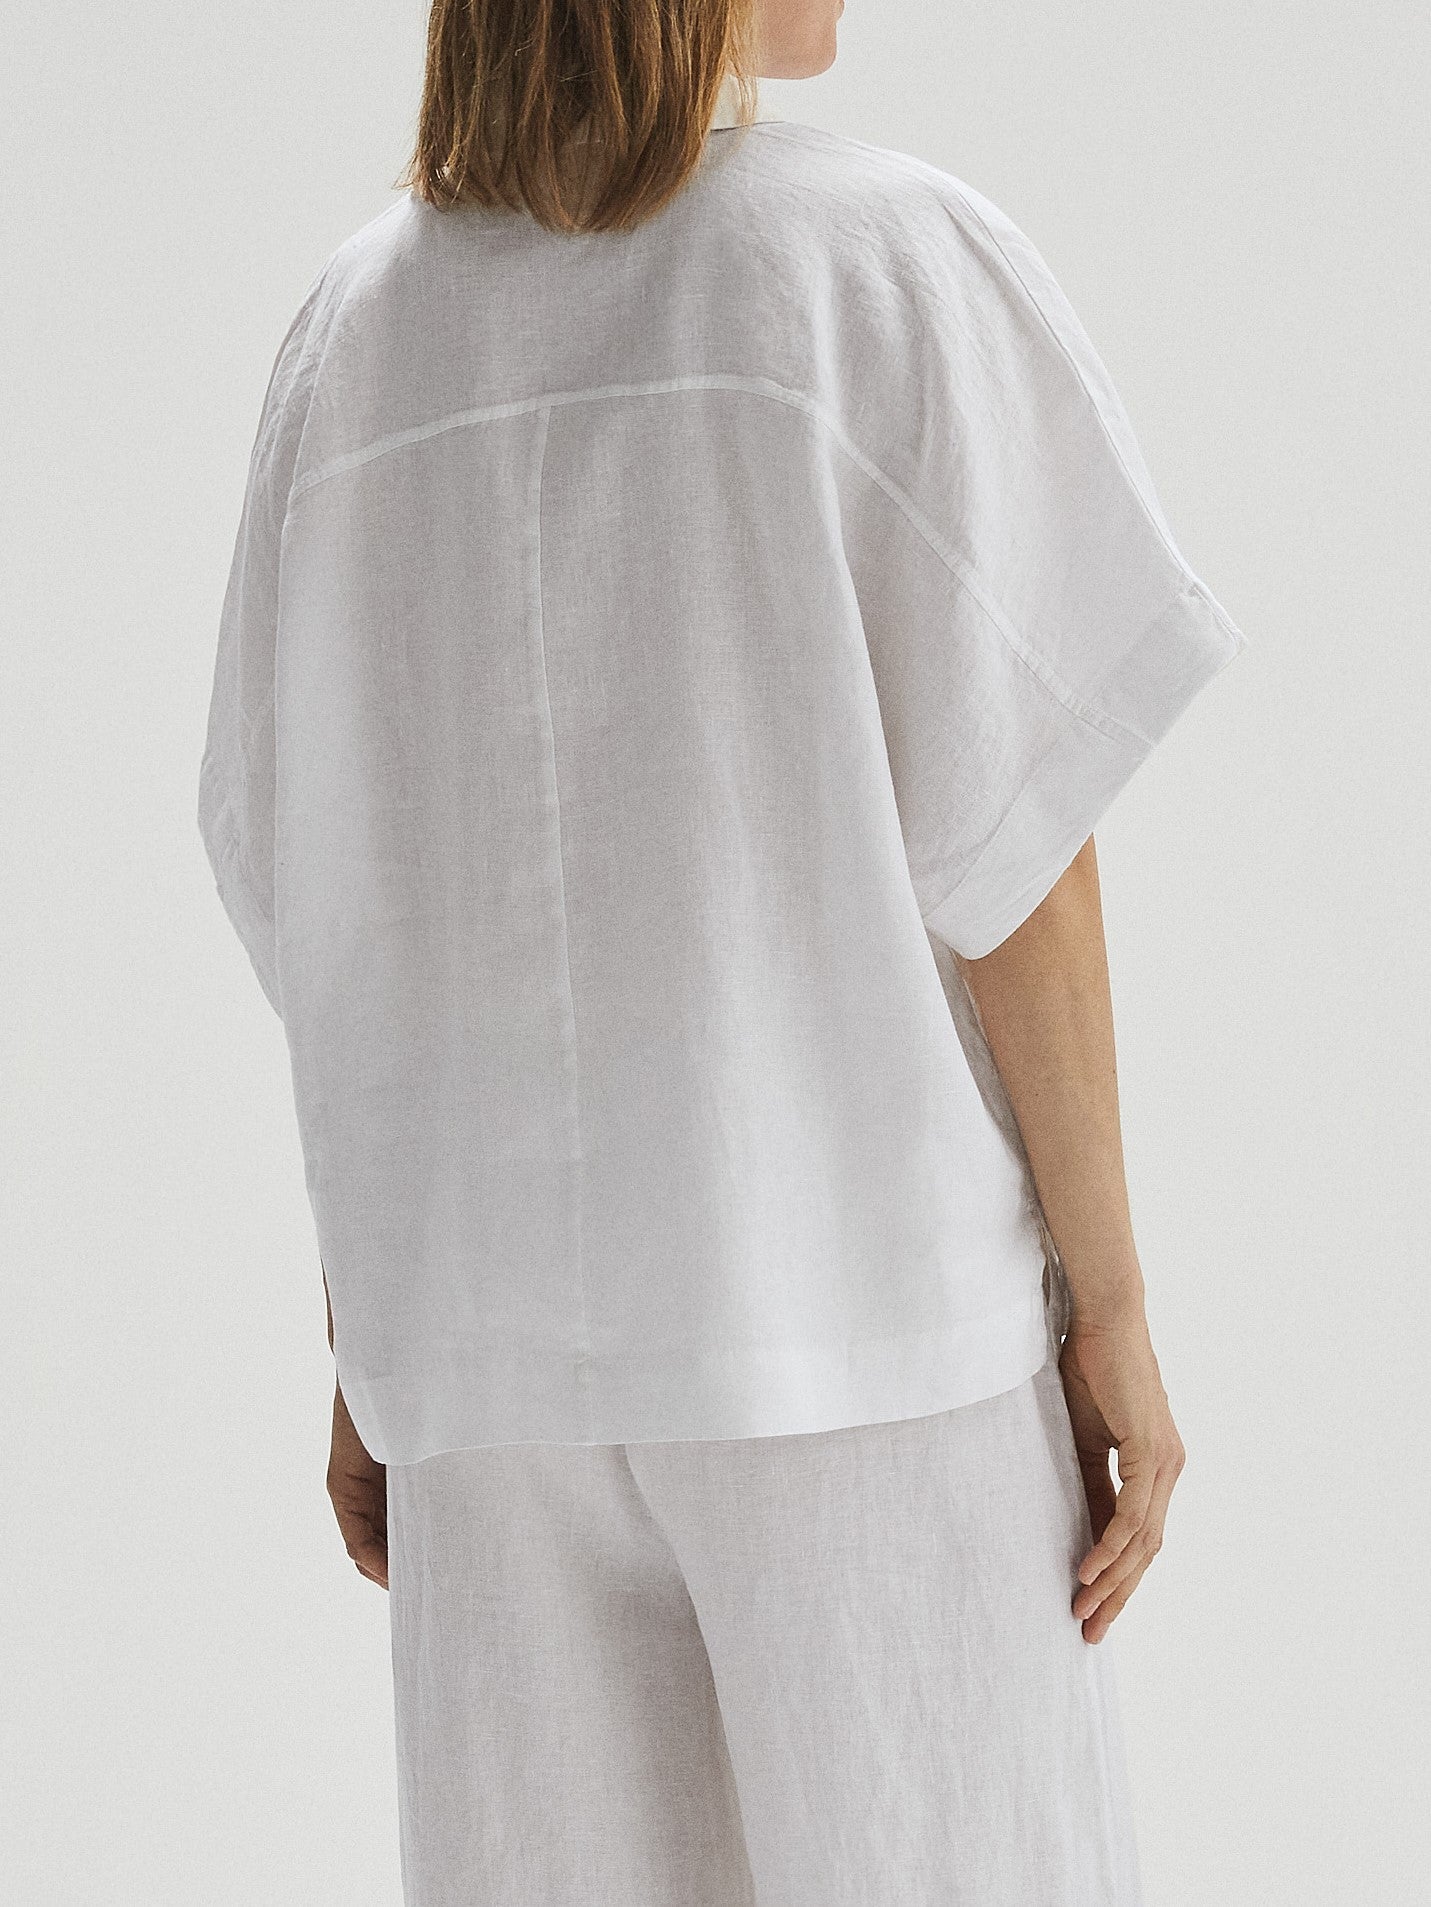 Cotton-Linen Elegant Bamboo Creative Print Casual Fashion V-Neck Short Sleeve Top